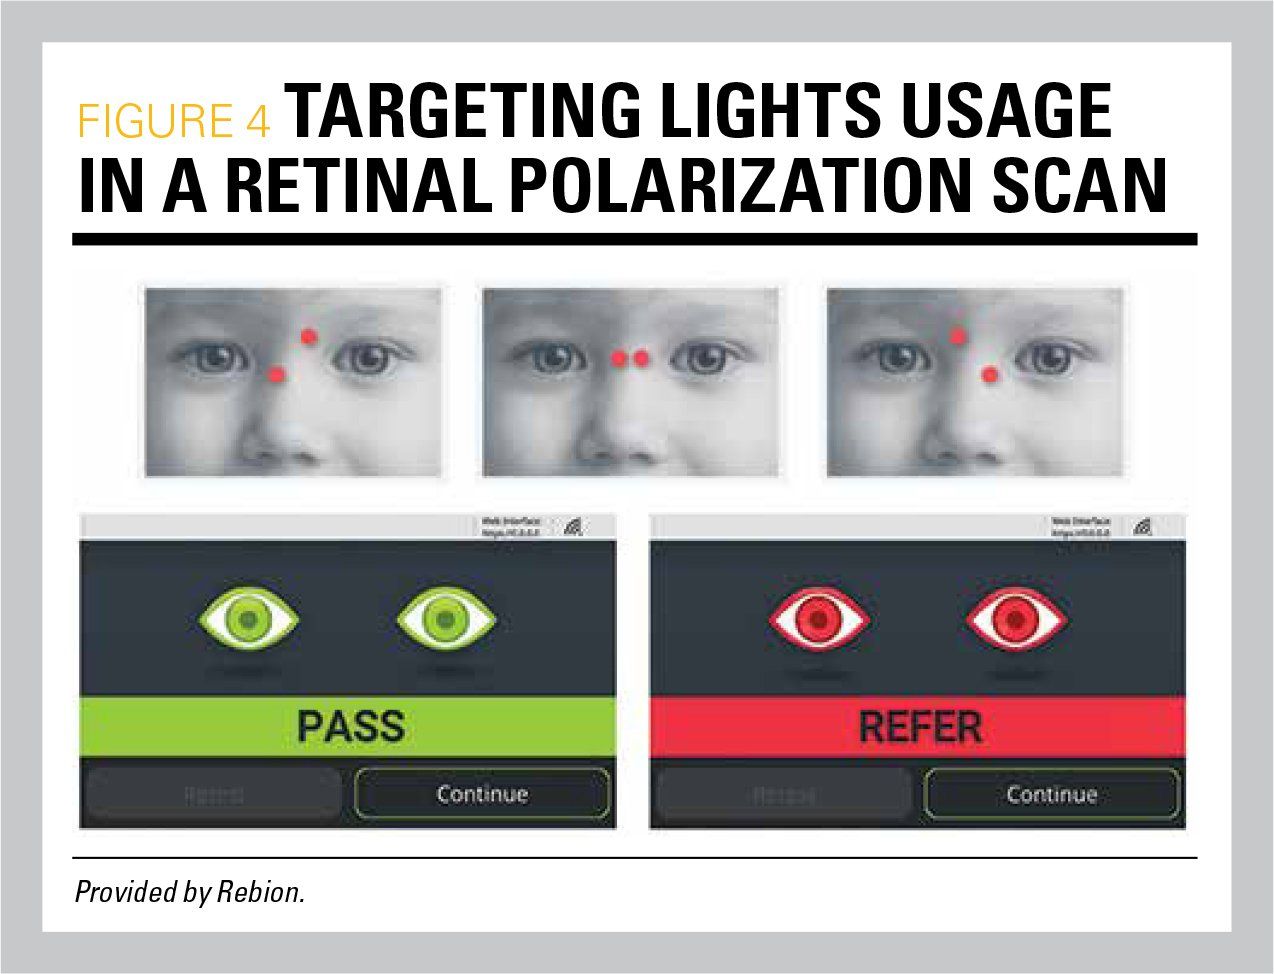 Targeting lights usage in a retinal polarization scan